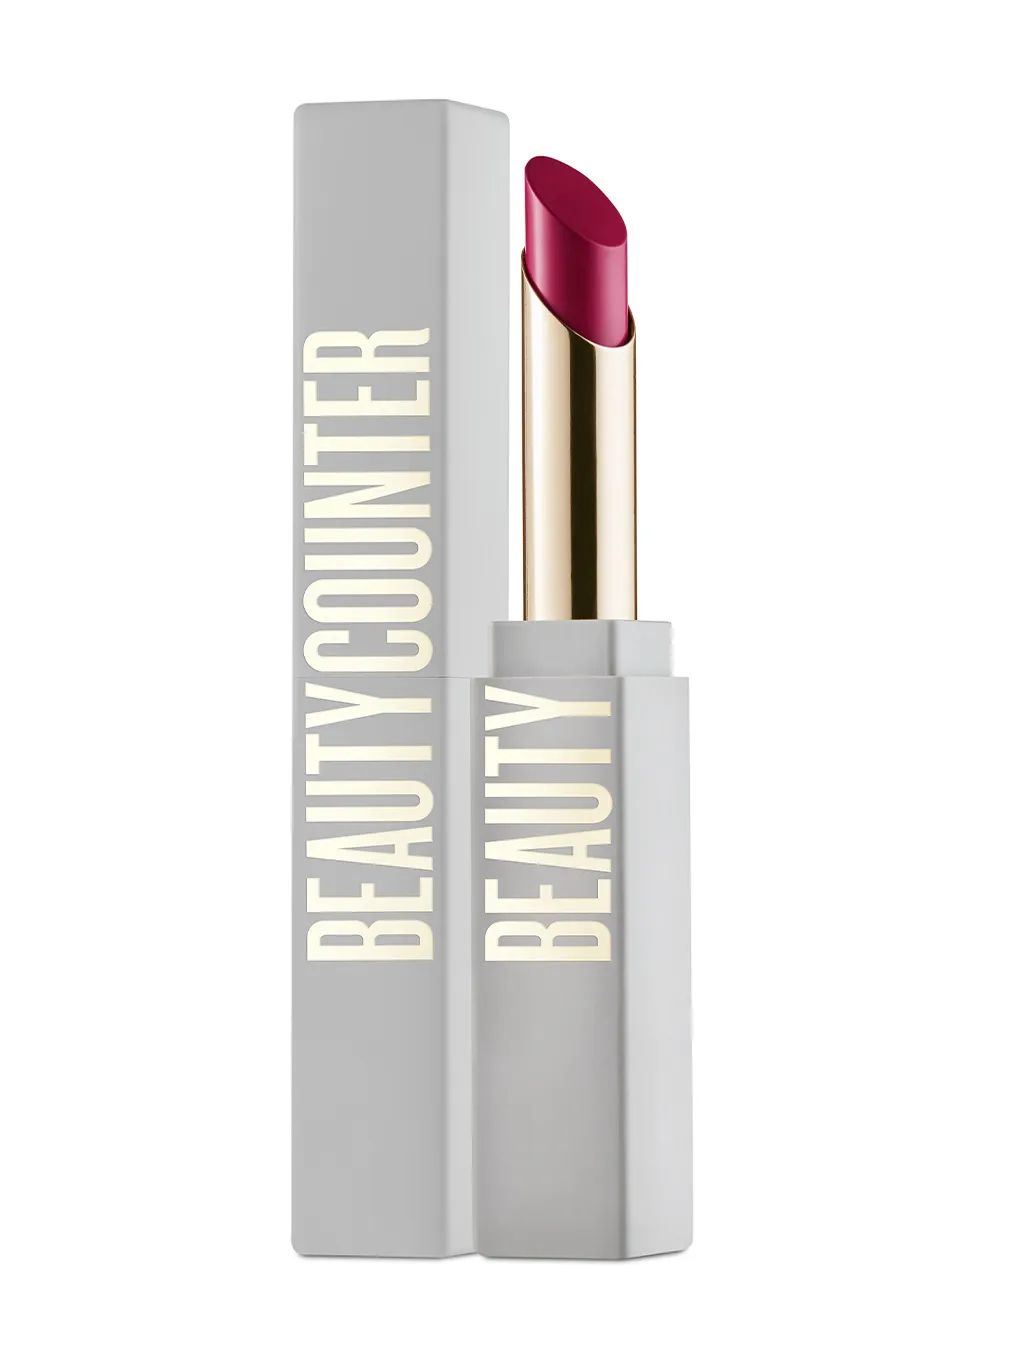 Statement Maker Satin Lipstick - Beautycounter - Skin Care, Makeup, Bath and Body and more! | Beautycounter.com